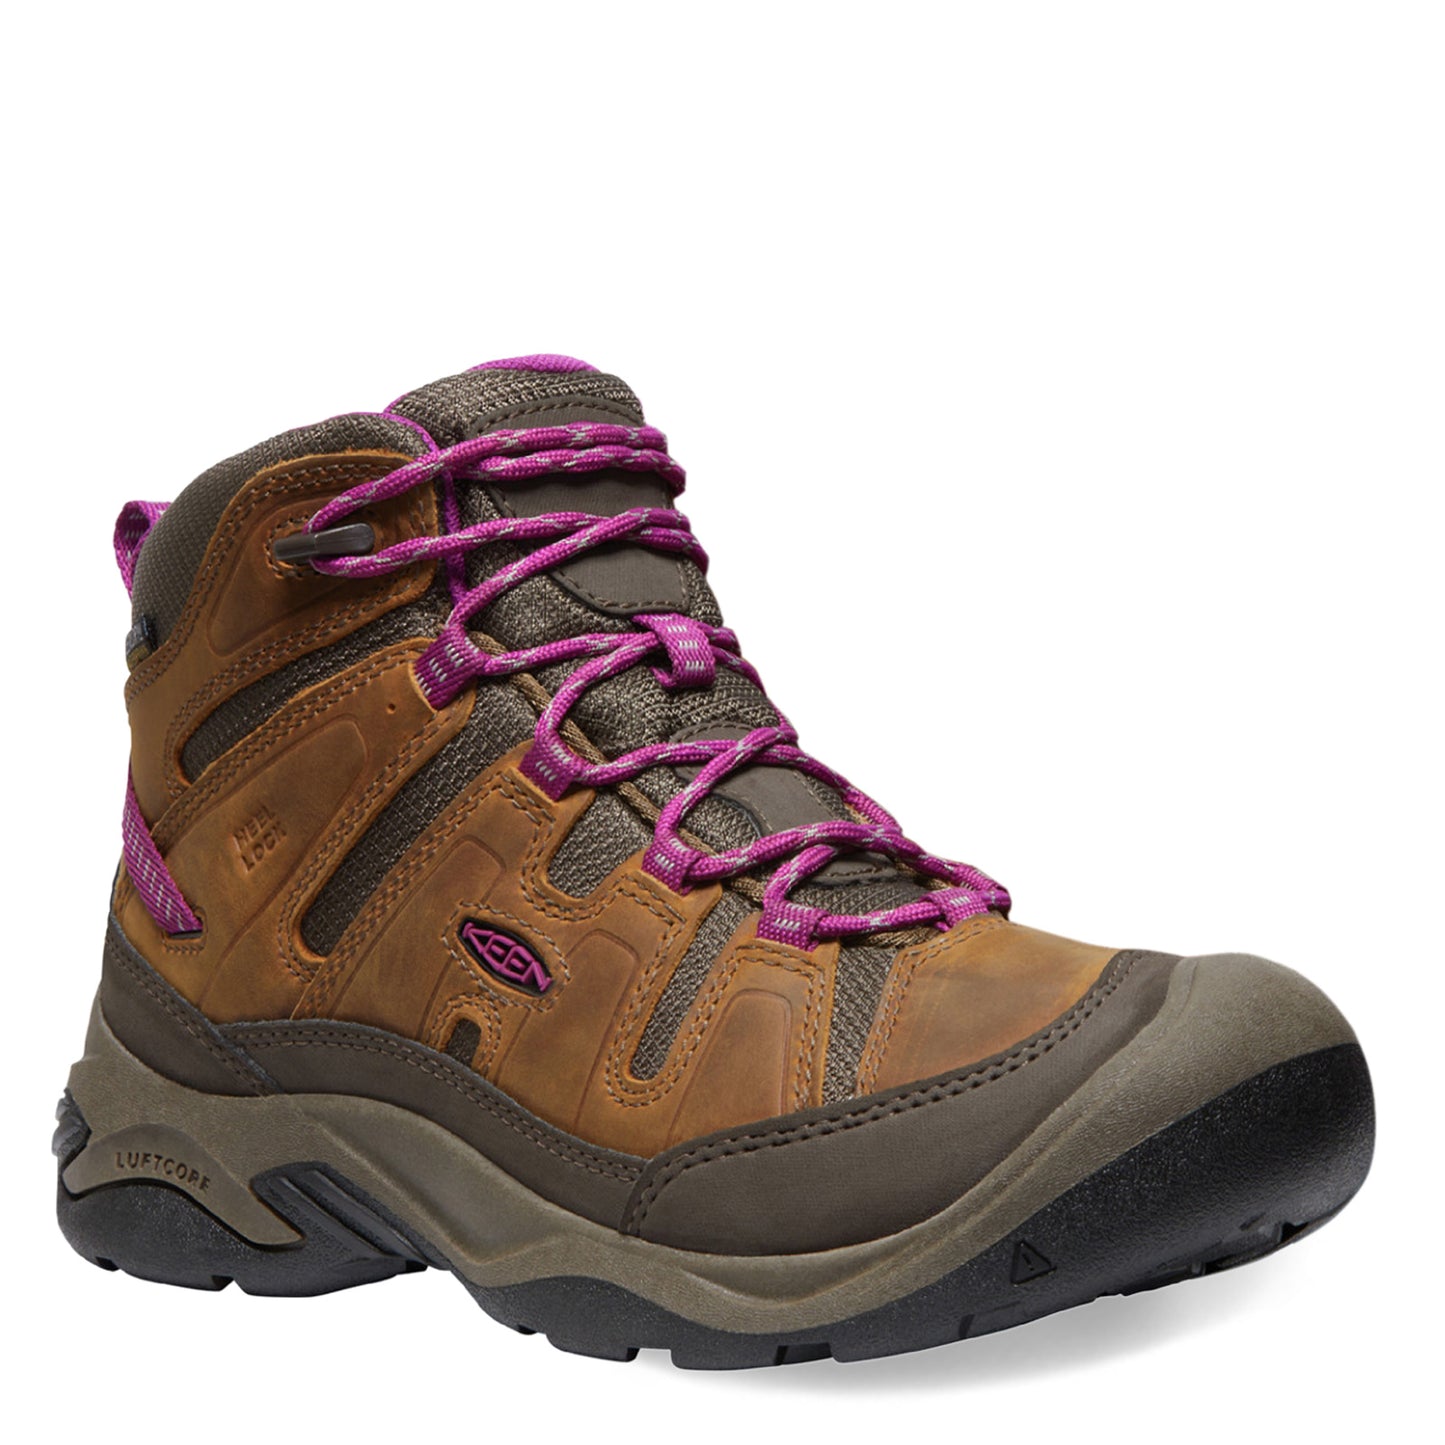 Peltz Shoes  Women's Keen Circadia Mid Waterproof Hiking Boot Syrup/Boysenberry 1026765